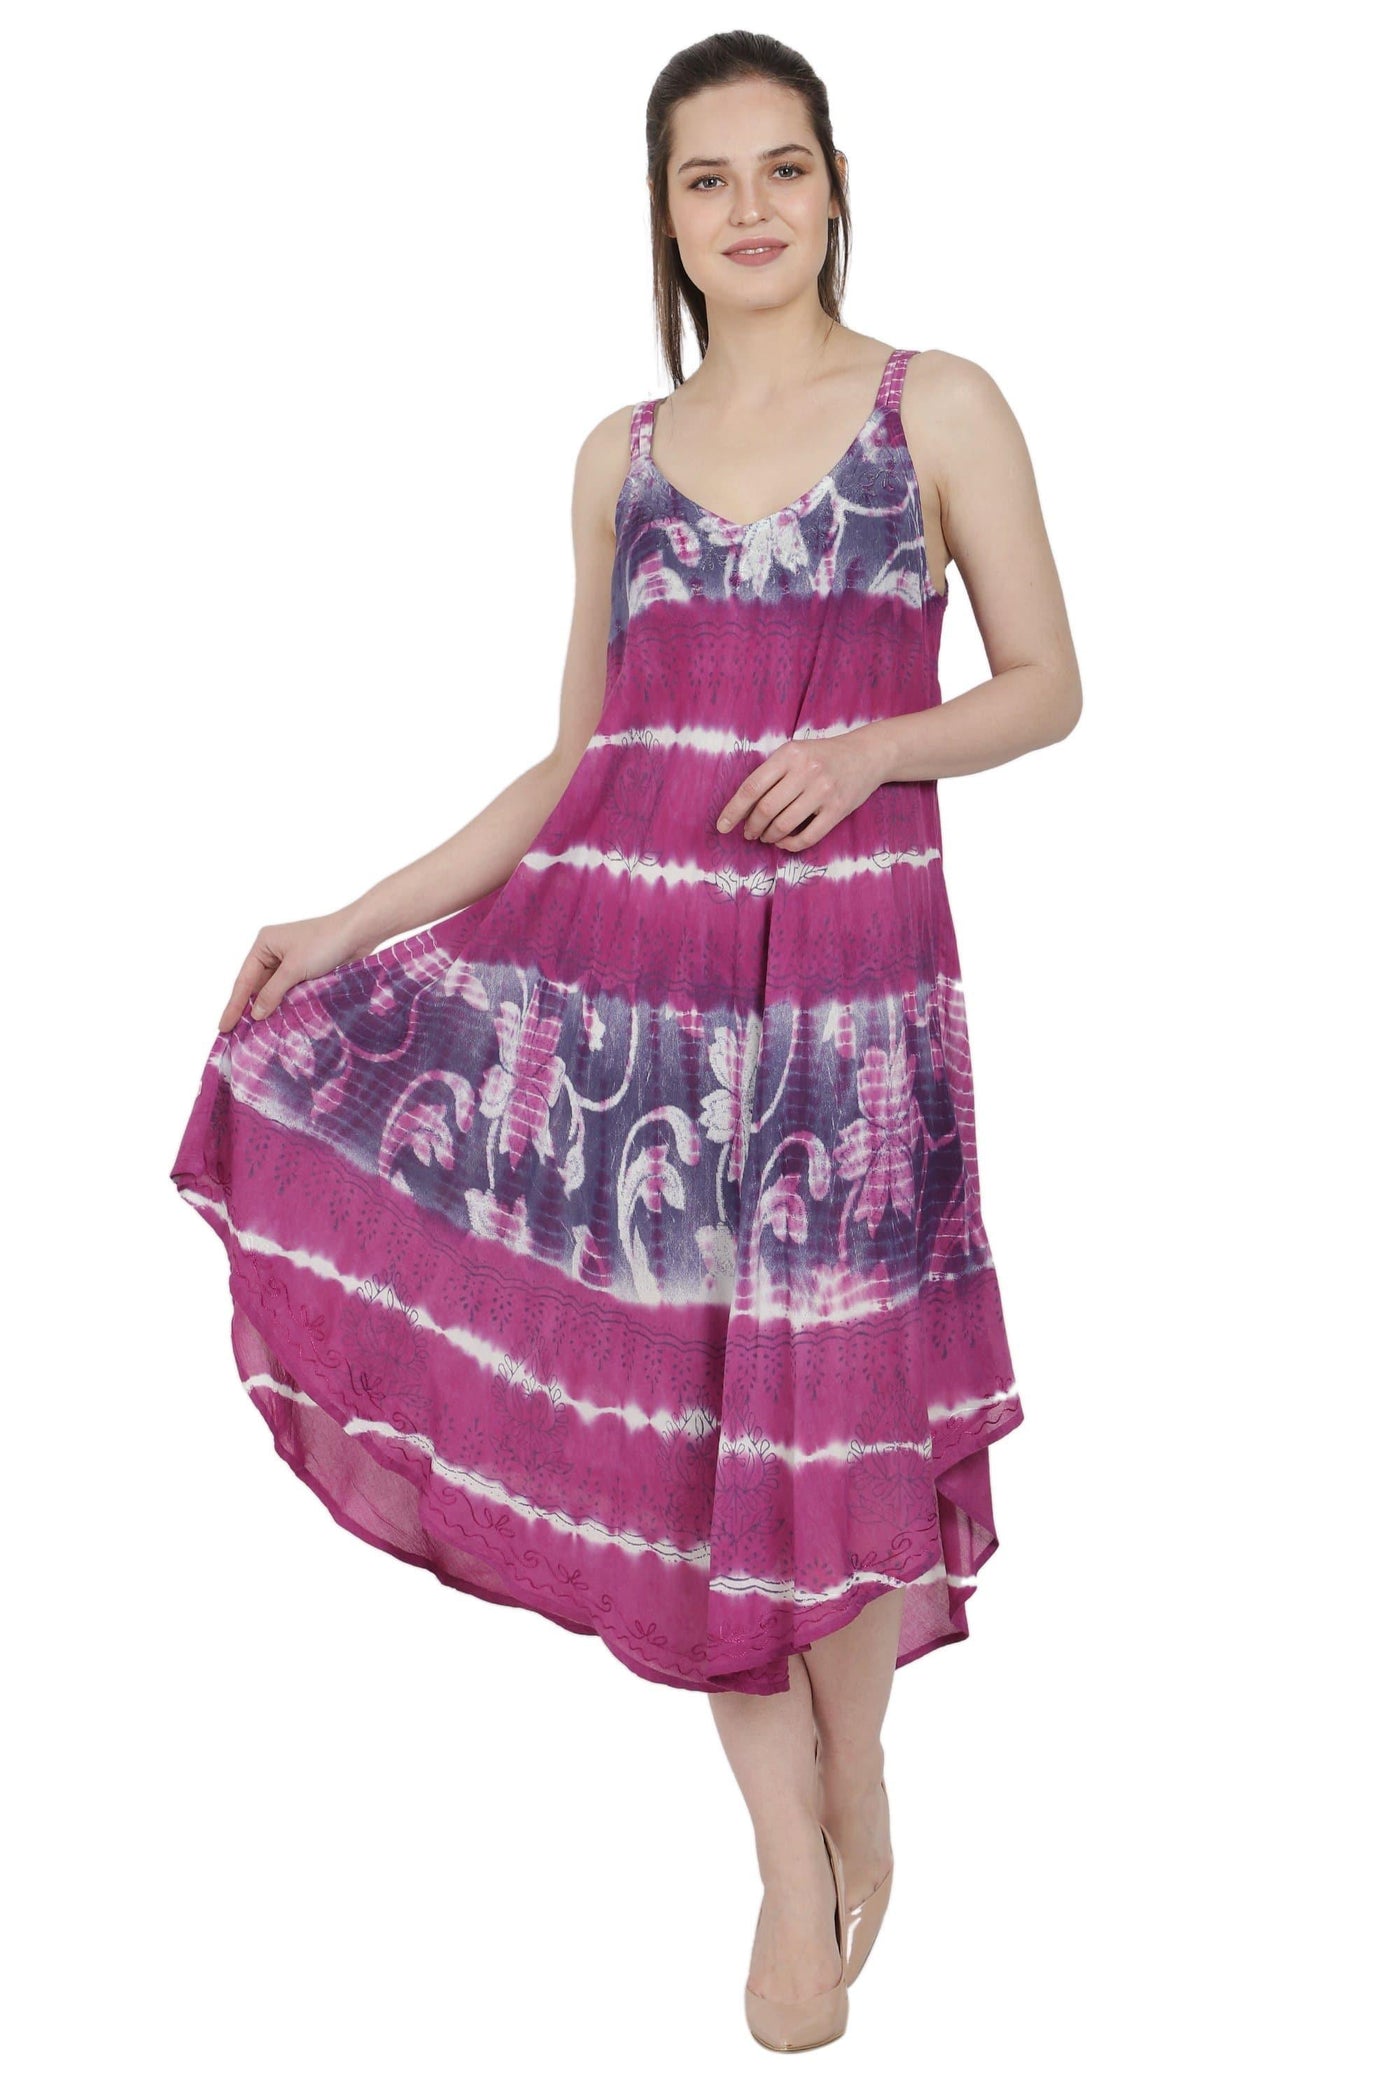 Batik Floral + Tie Dye House Umbrella Dress Dress UD48-2361 - Advance Apparels Inc